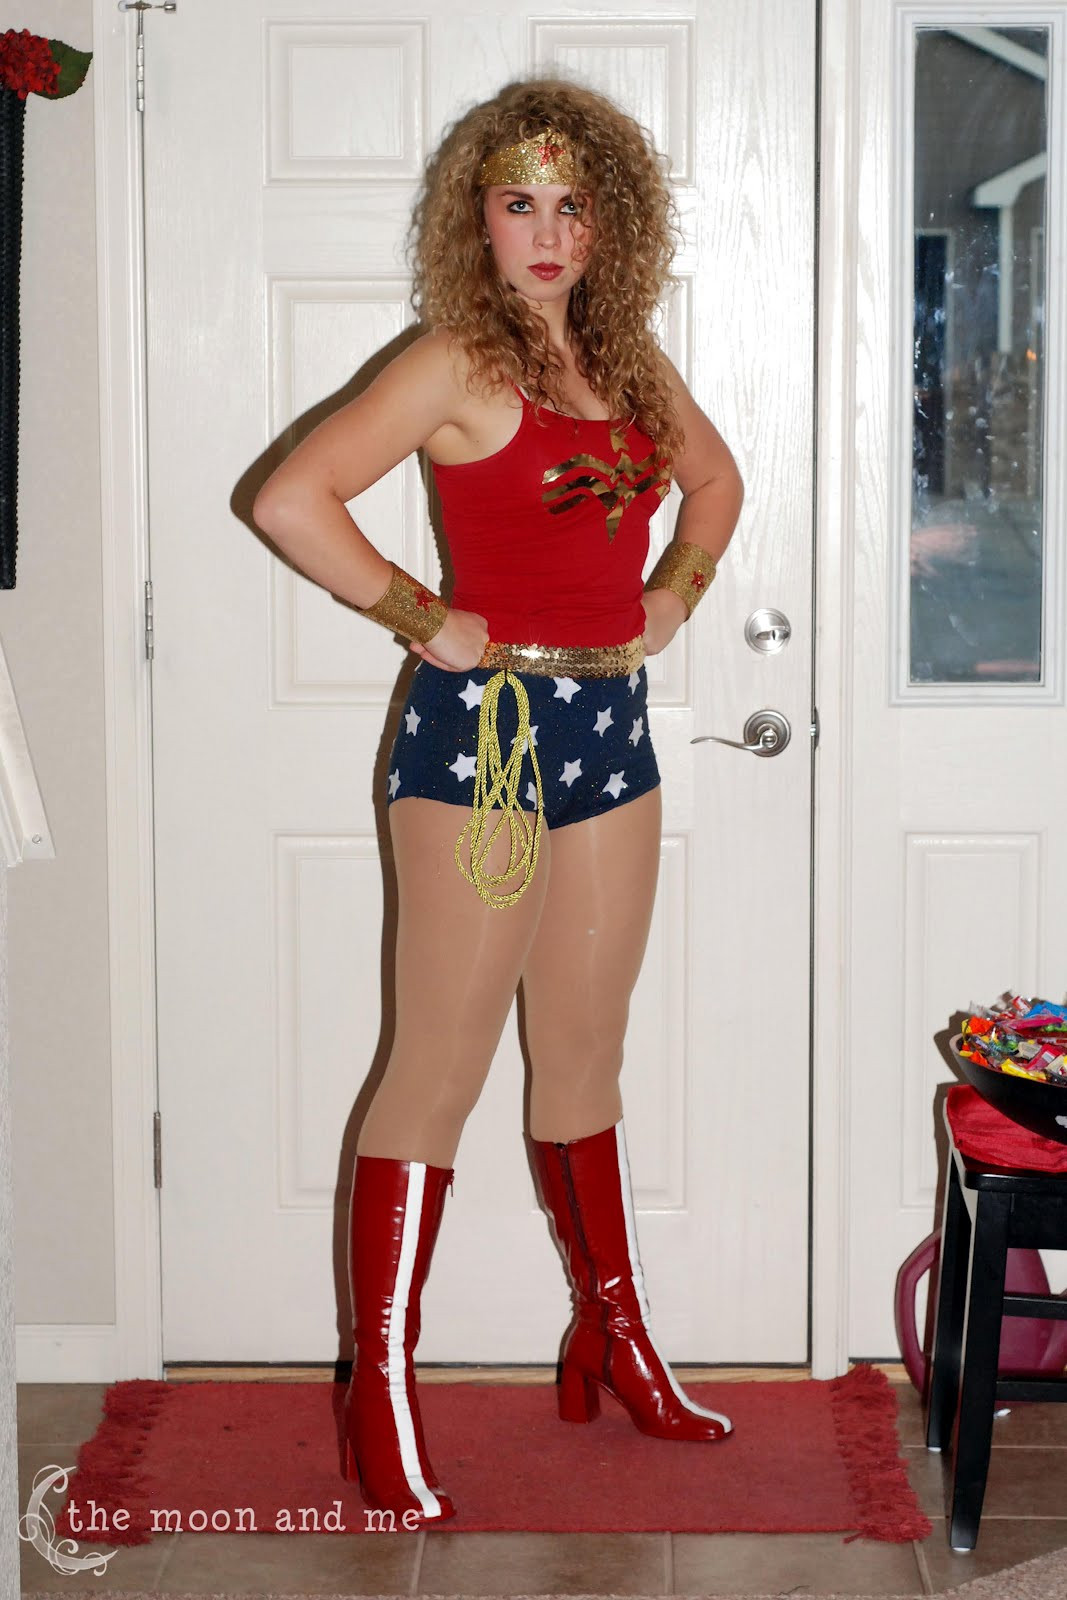 Wonder Woman Halloween Costume DIY
 The Moon and Me DIY Wonder Woman Costume